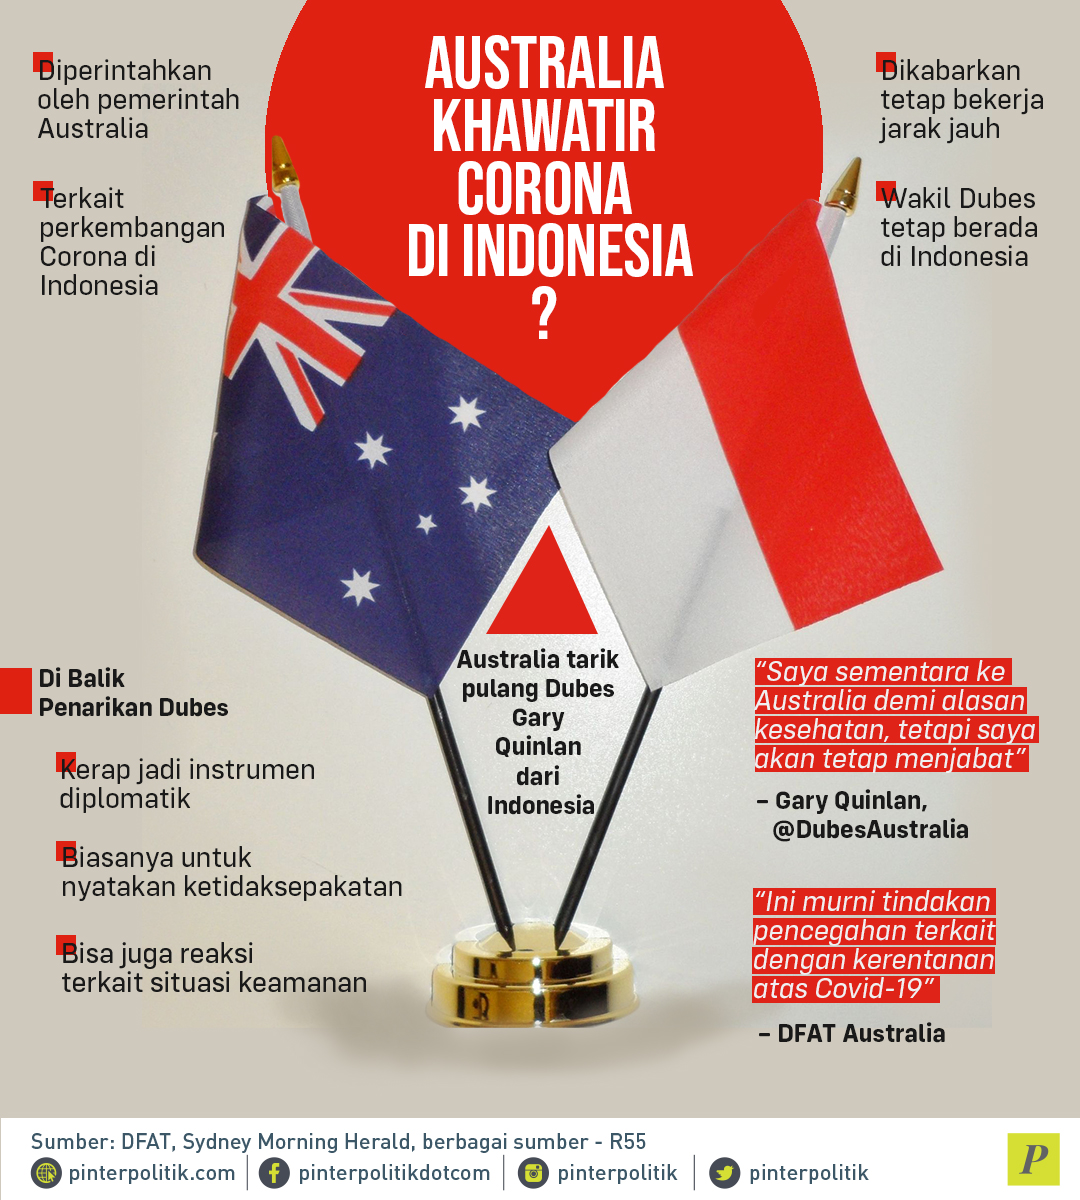 Australia tarik pulang dubes dari Indonesia